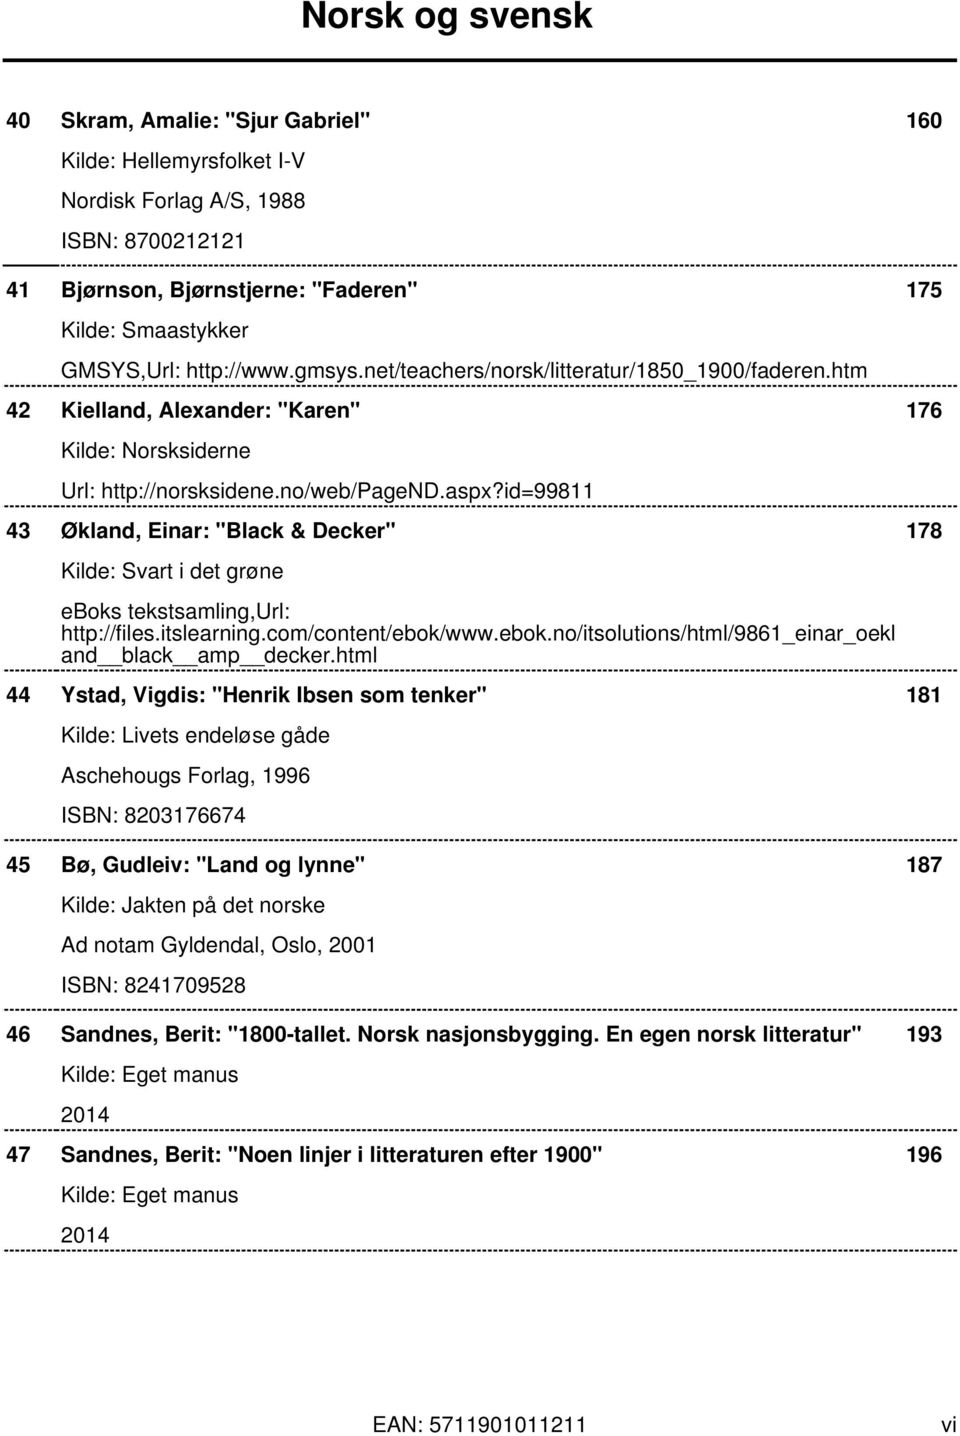 id=99811 43 Økland, Einar: "Black & Decker" 178 Kilde: Svart i det grøne eboks tekstsamling,url: http://files.itslearning.com/content/ebok/www.ebok.no/itsolutions/html/9861_einar_oekl and black amp decker.